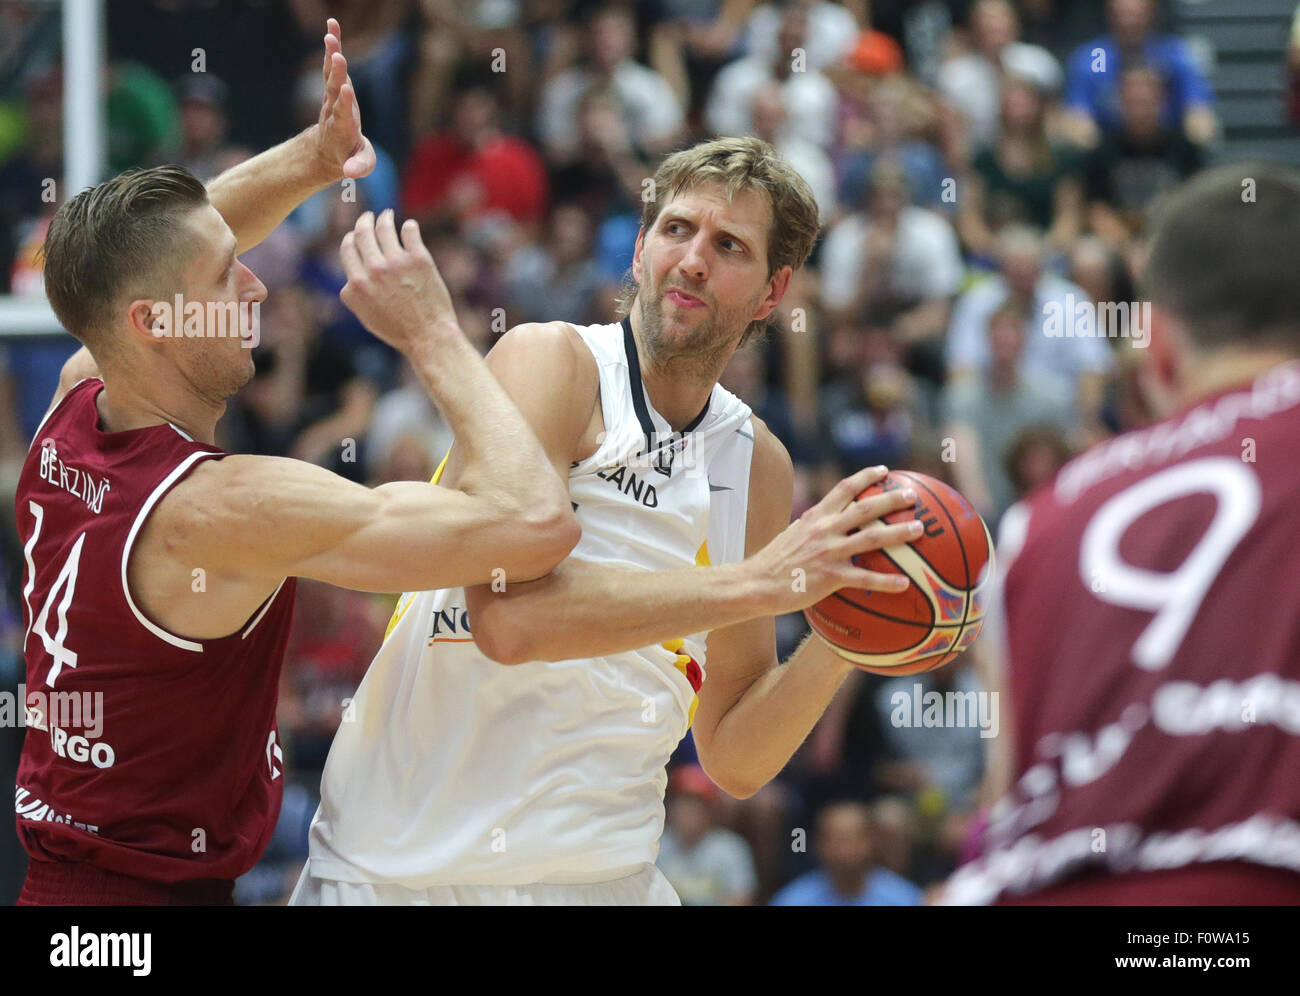 Basketball Supercup: Germany vs. Latvia in the Inselpark Halle, Hamburg,  Germany, 21 August 2015. Latvia's Dairis